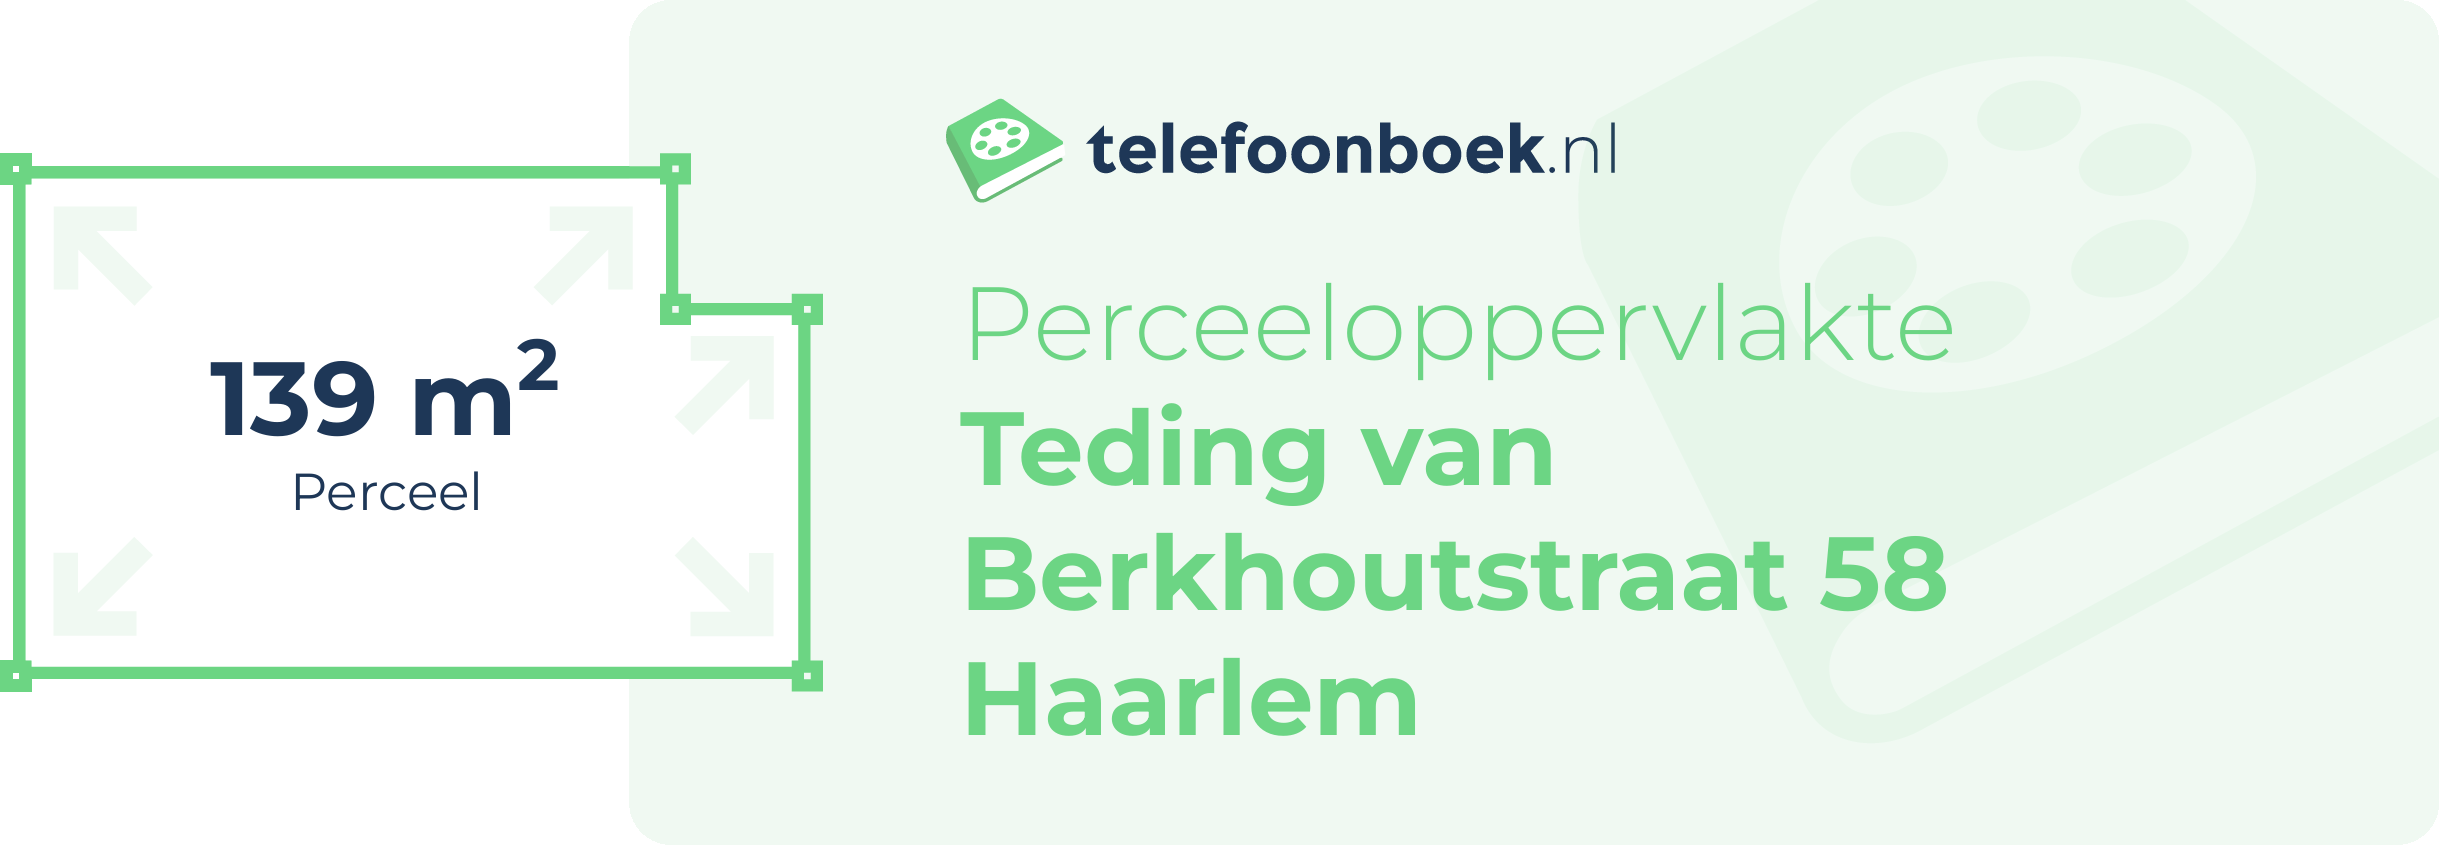 Perceeloppervlakte Teding Van Berkhoutstraat 58 Haarlem